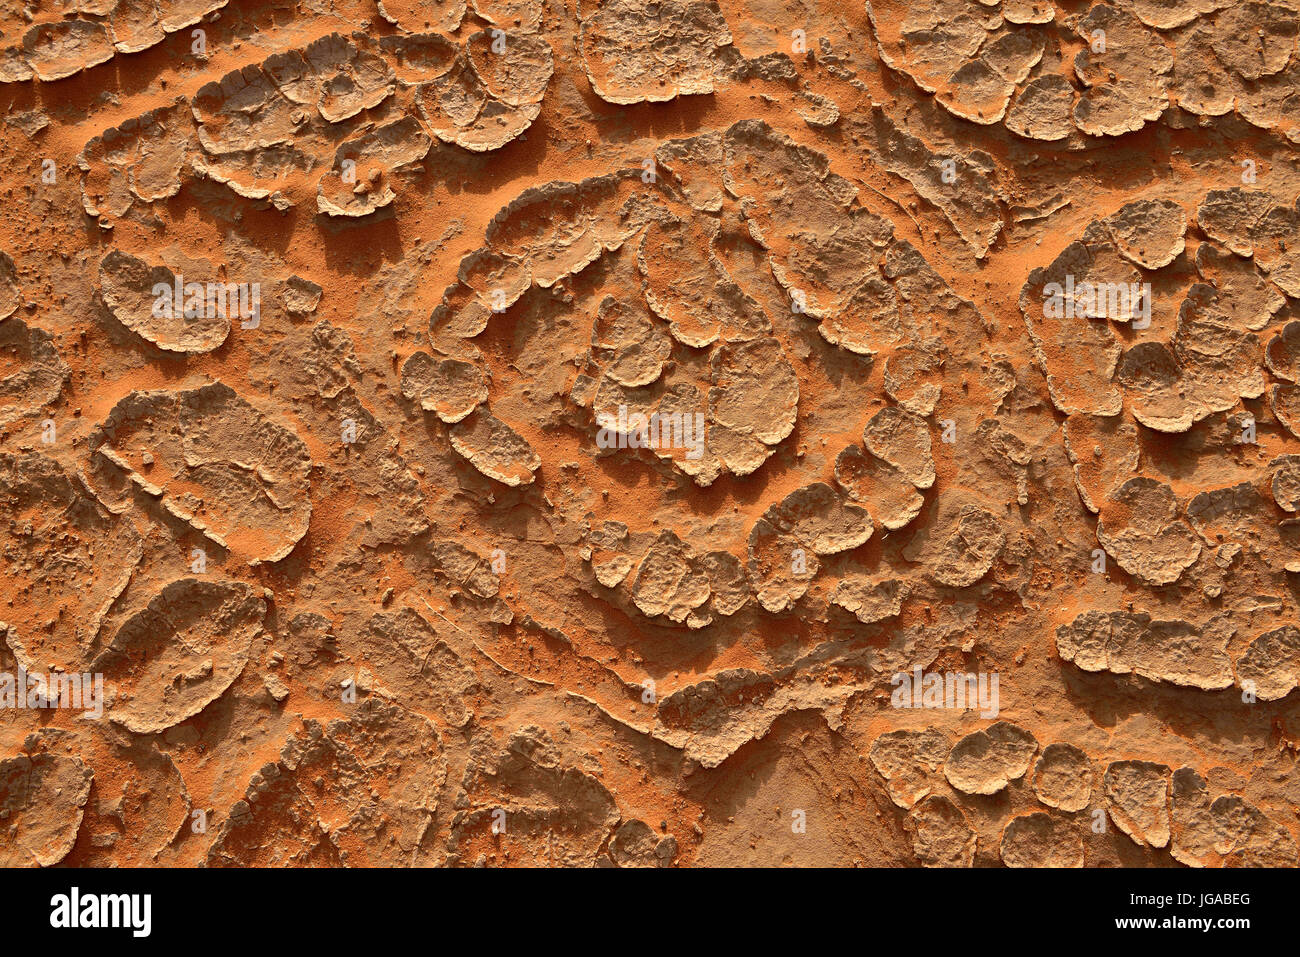 Cracked mud patterns on the playa, Tassili n'Ajjer National Park, Sahara desert, Algeria Stock Photo